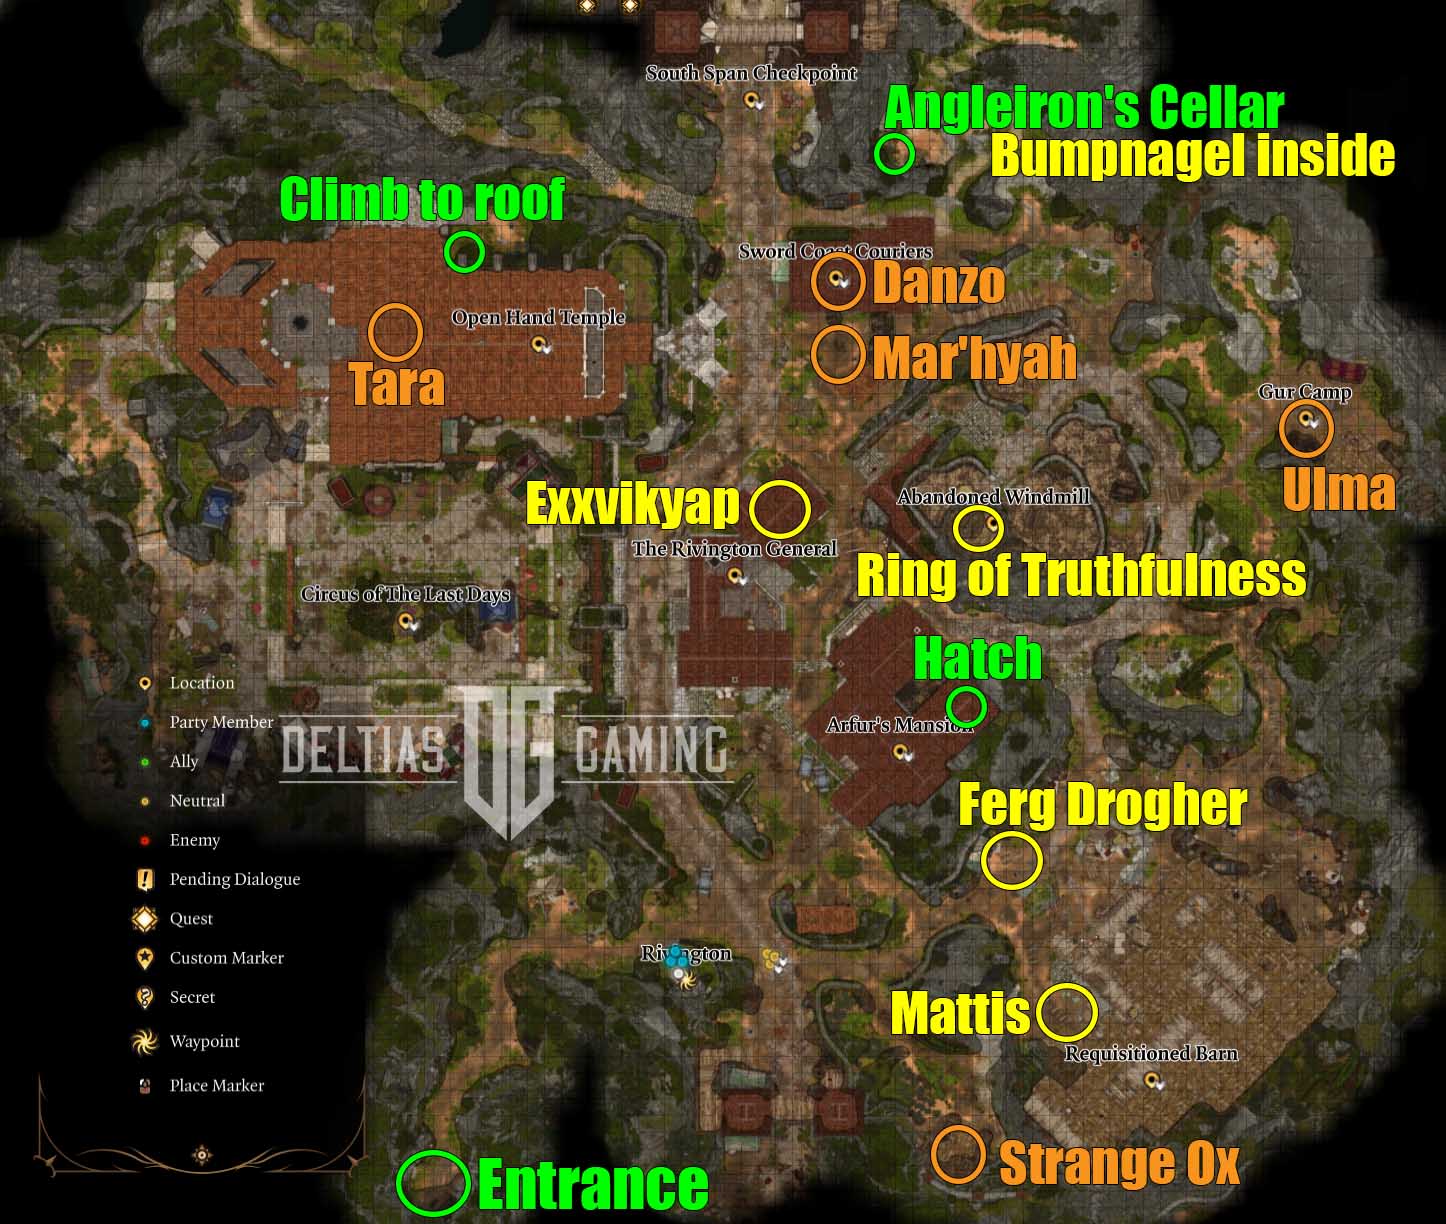 Baldur's Gate 3 Rivington location map Strange Ox, Ulma, Angleiron's Cellar, Exxvikyap